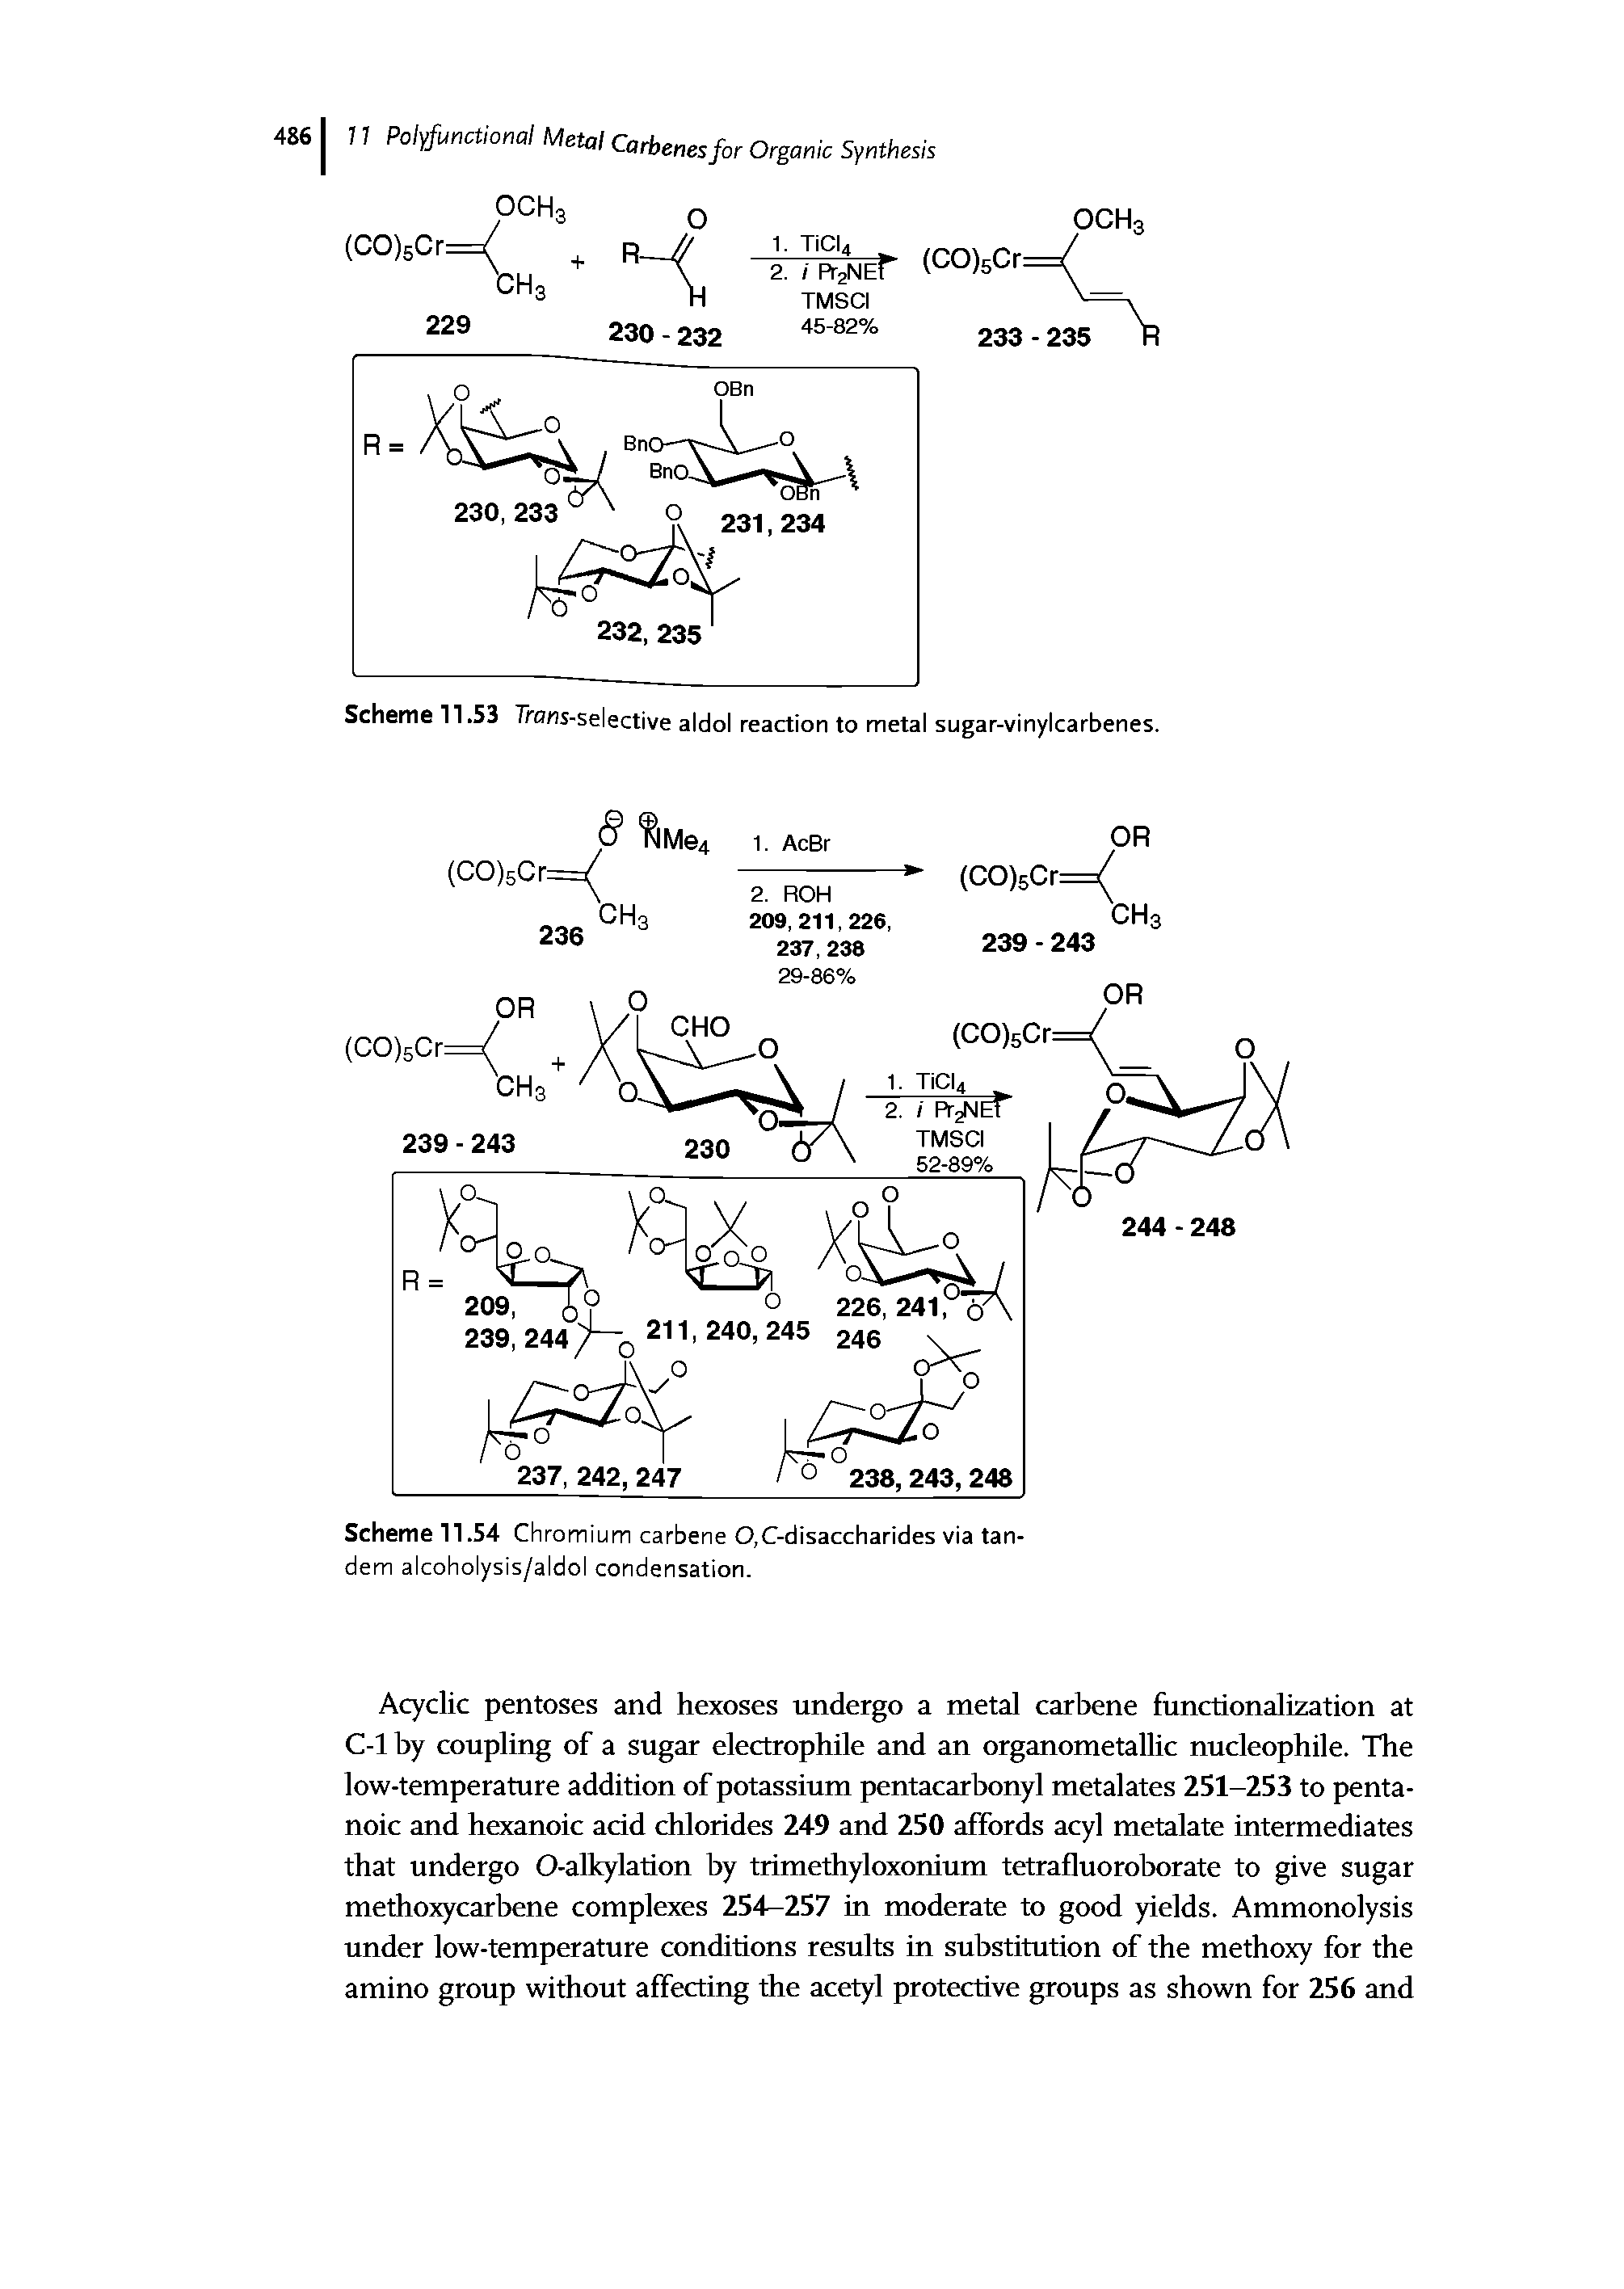 Scheme 11.53 Trans-selective aldol reaction to metal sugar-vinylcarbenes.